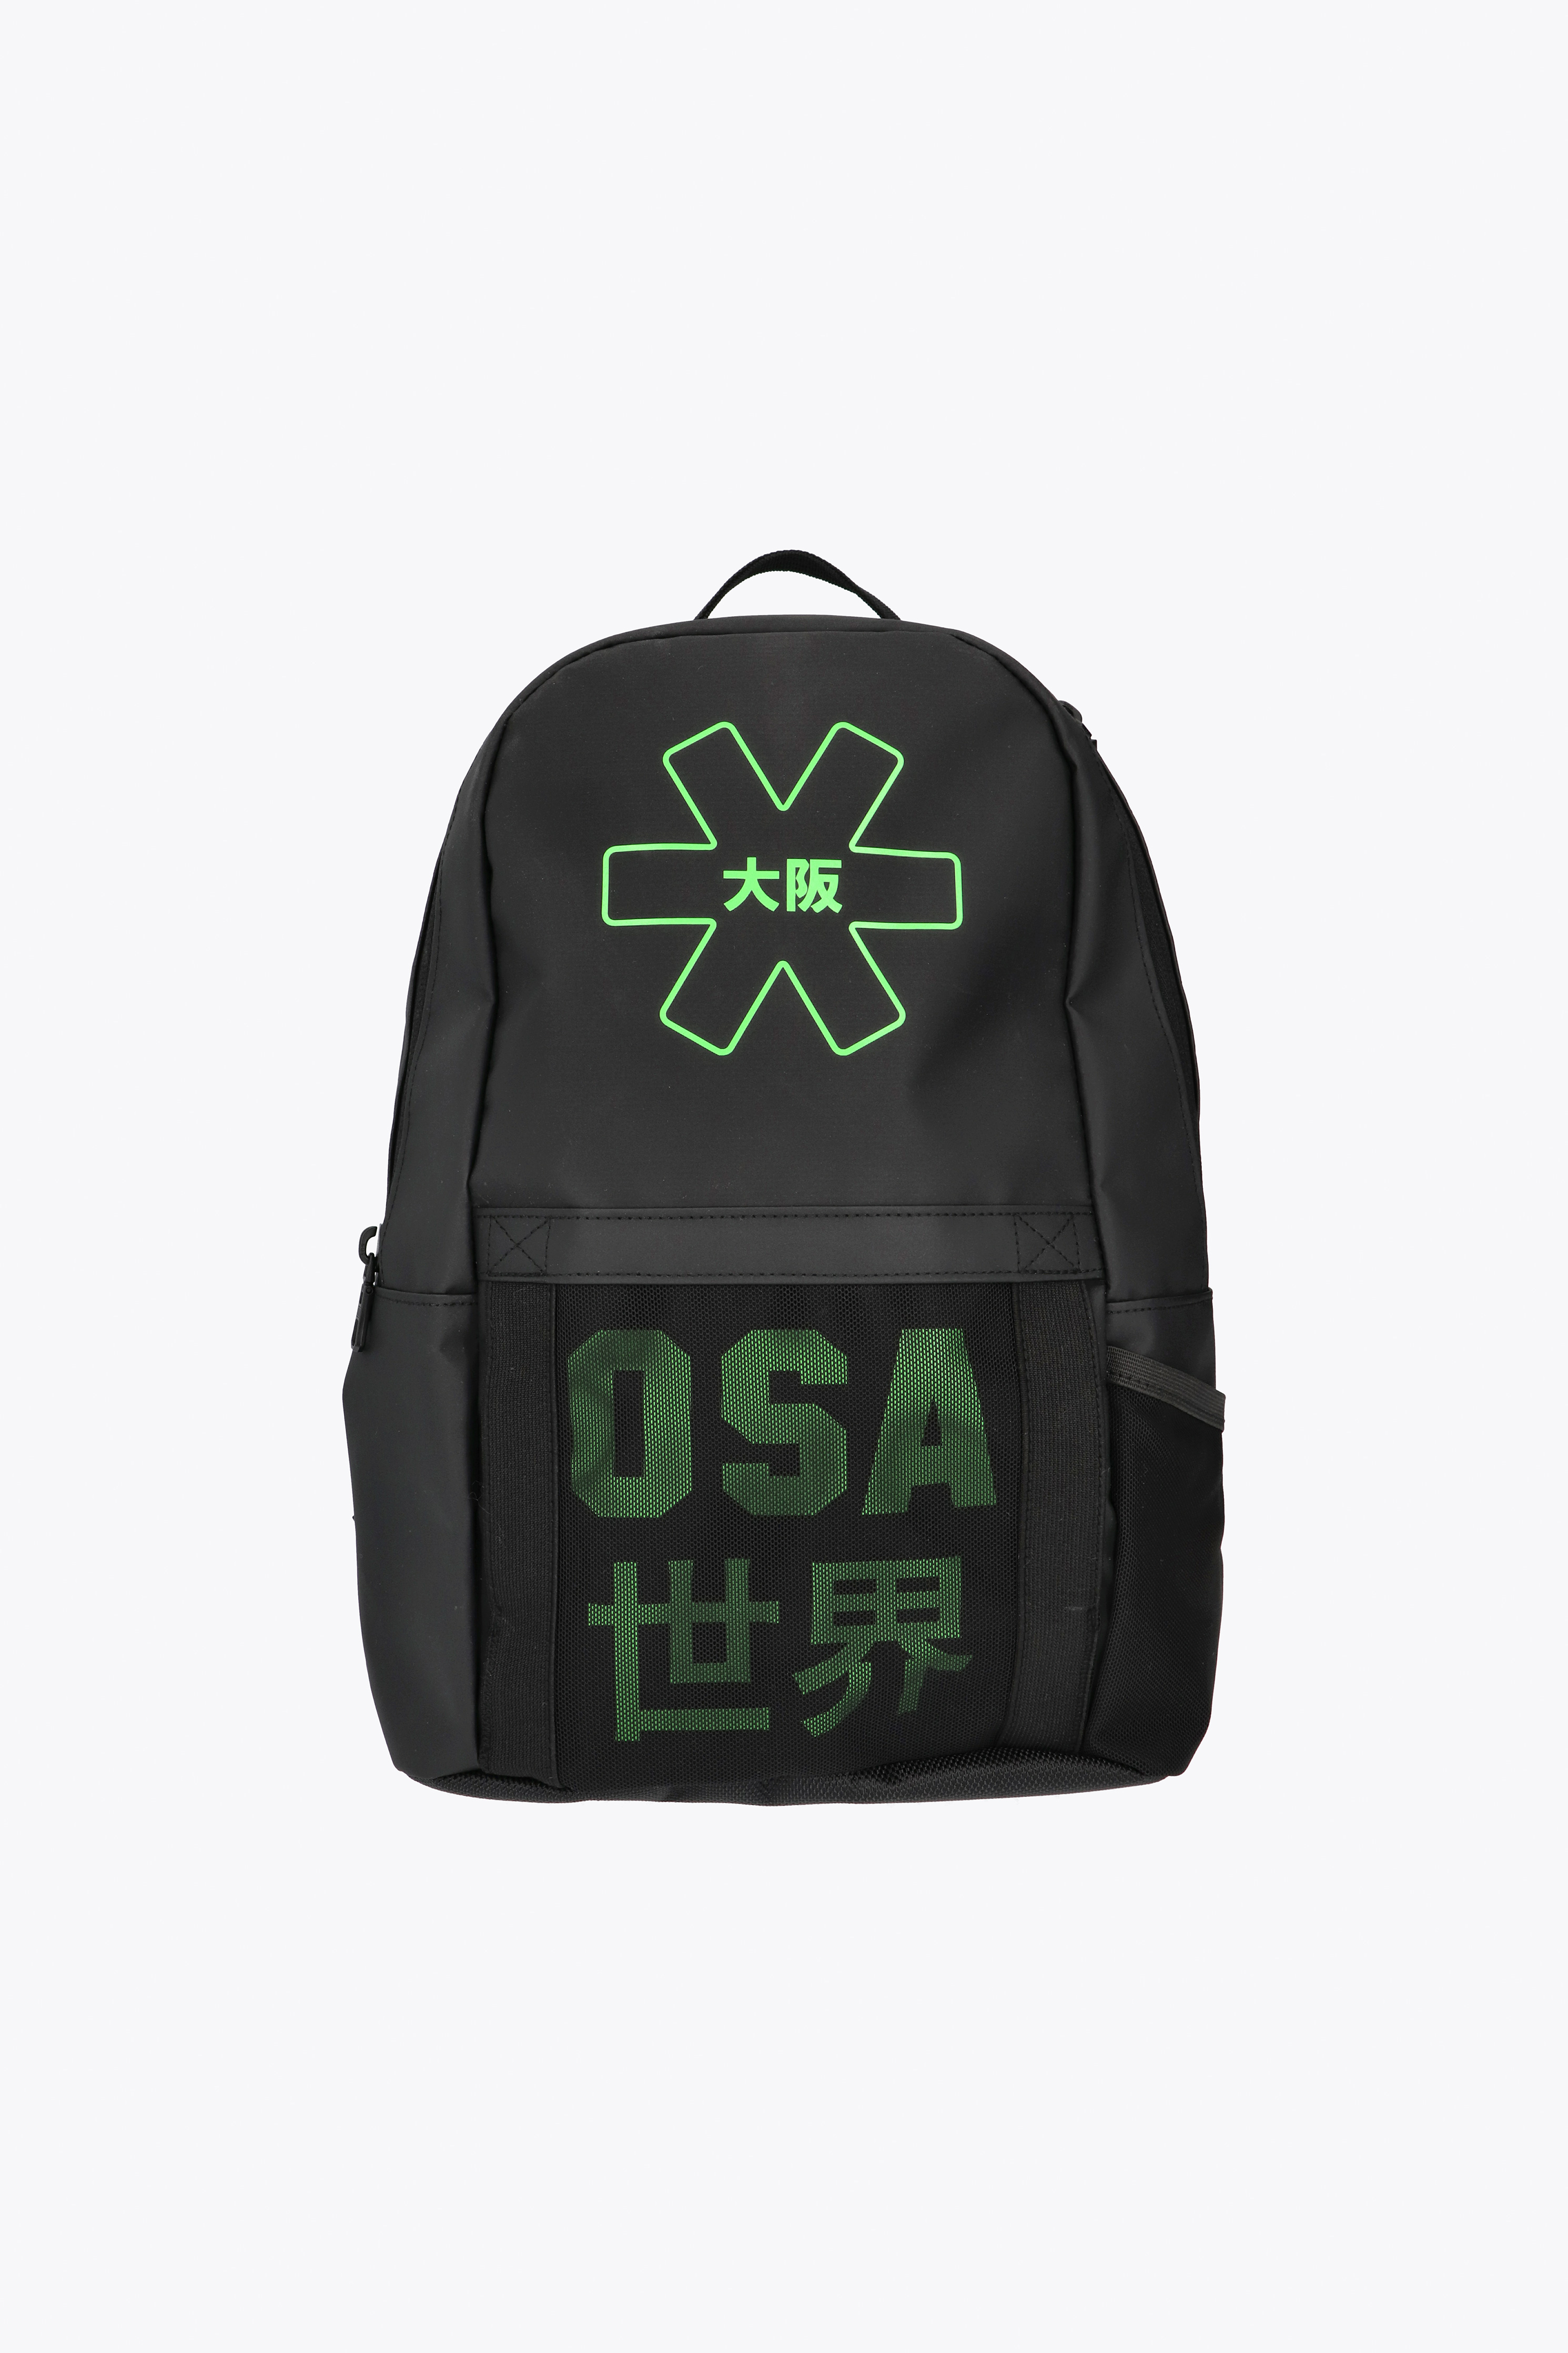 OSAKA - Backpack Pro Tour Compact